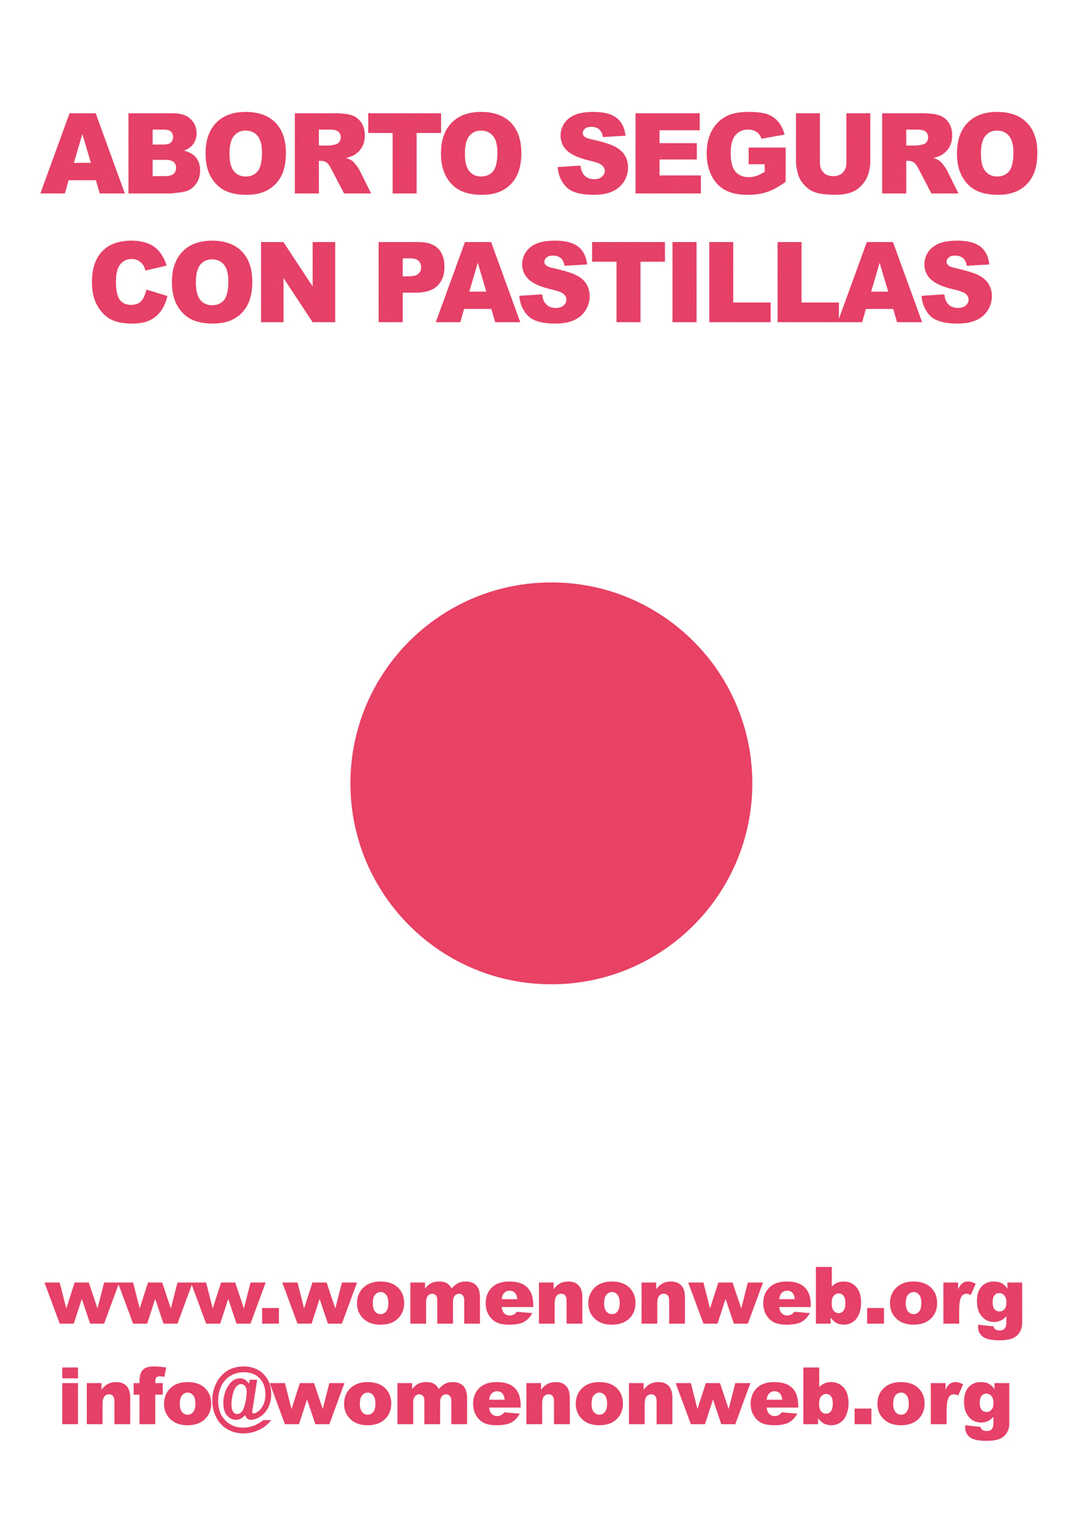 Women on Web spanish sticker